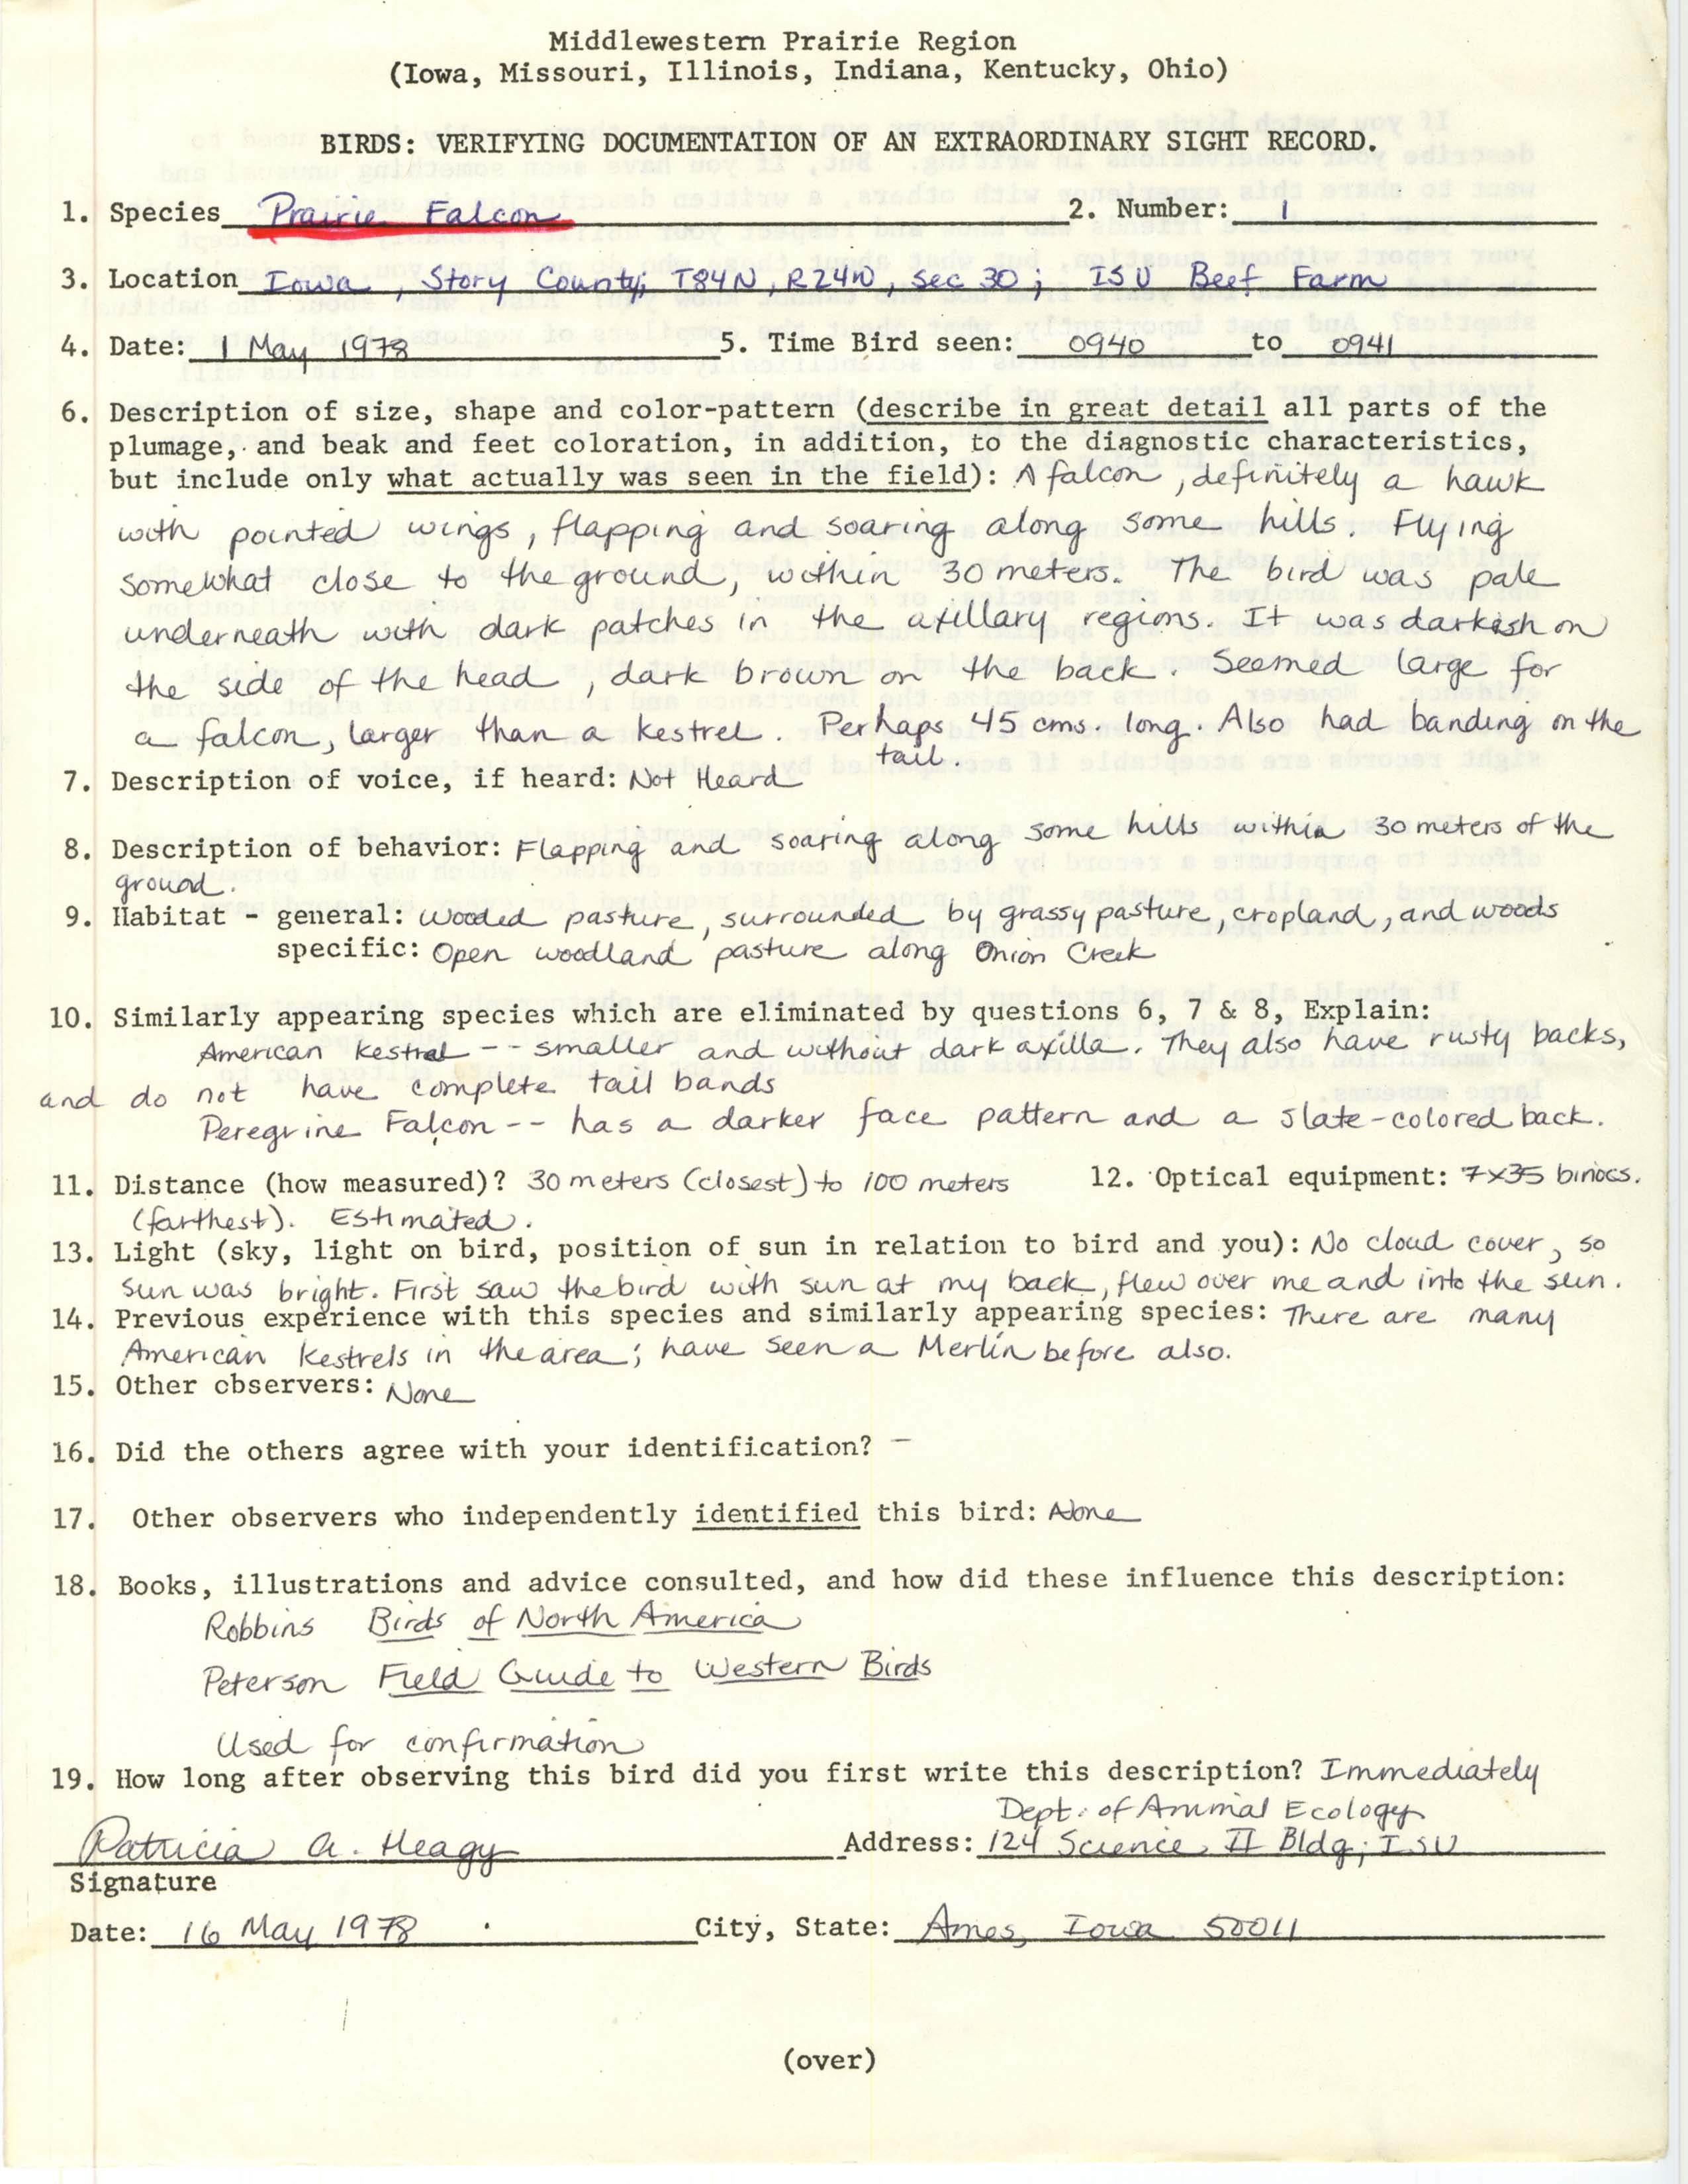 Rare bird documentation form for Prairie Falcon at Iowa State University Beef Farm, 1978